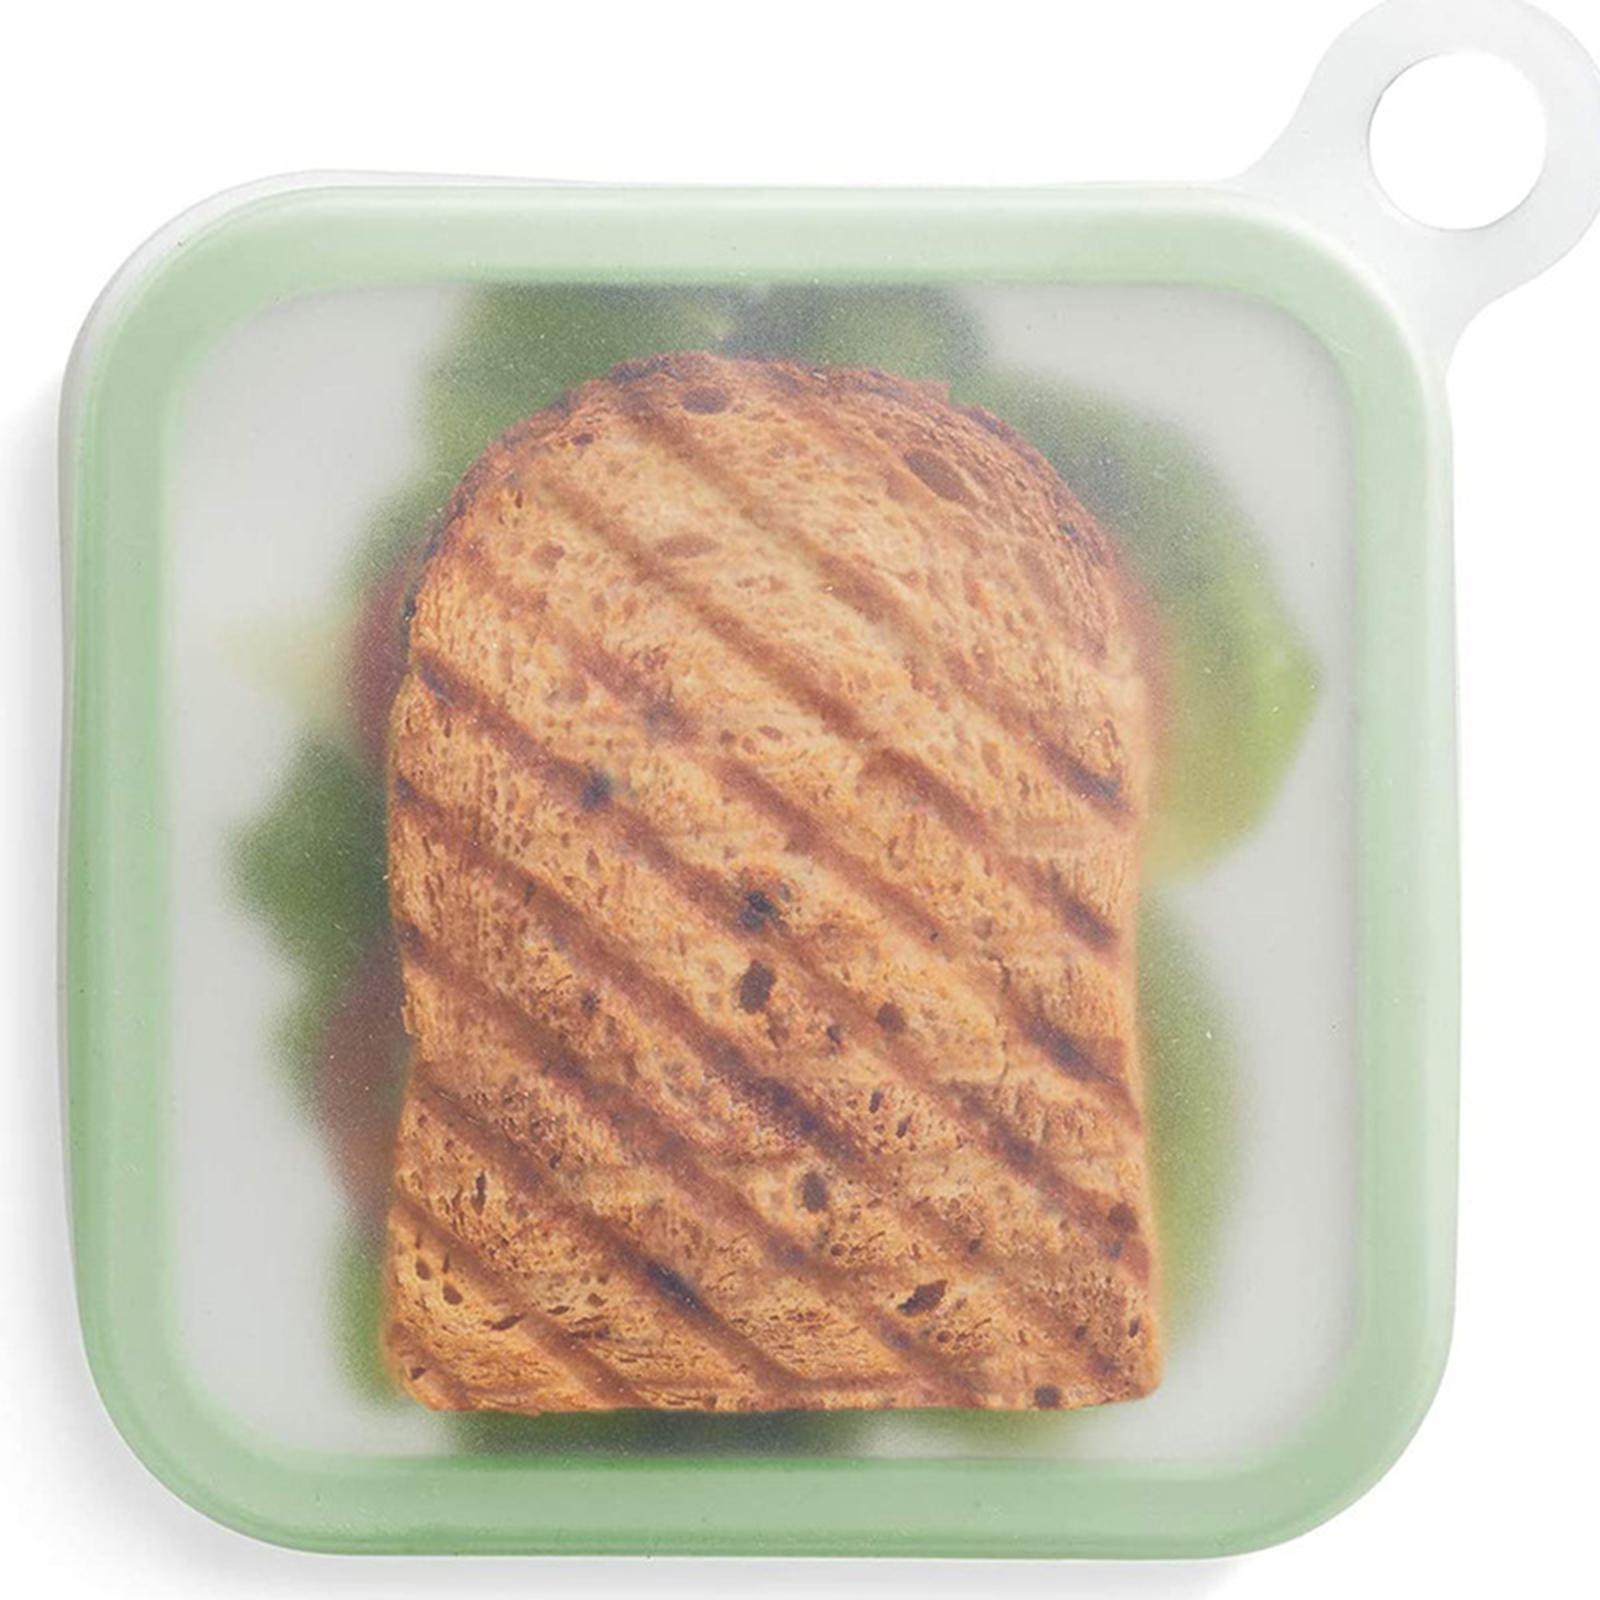 Bento Box Sandwich Toast Case Silicone Lunch Box for Parent-child School